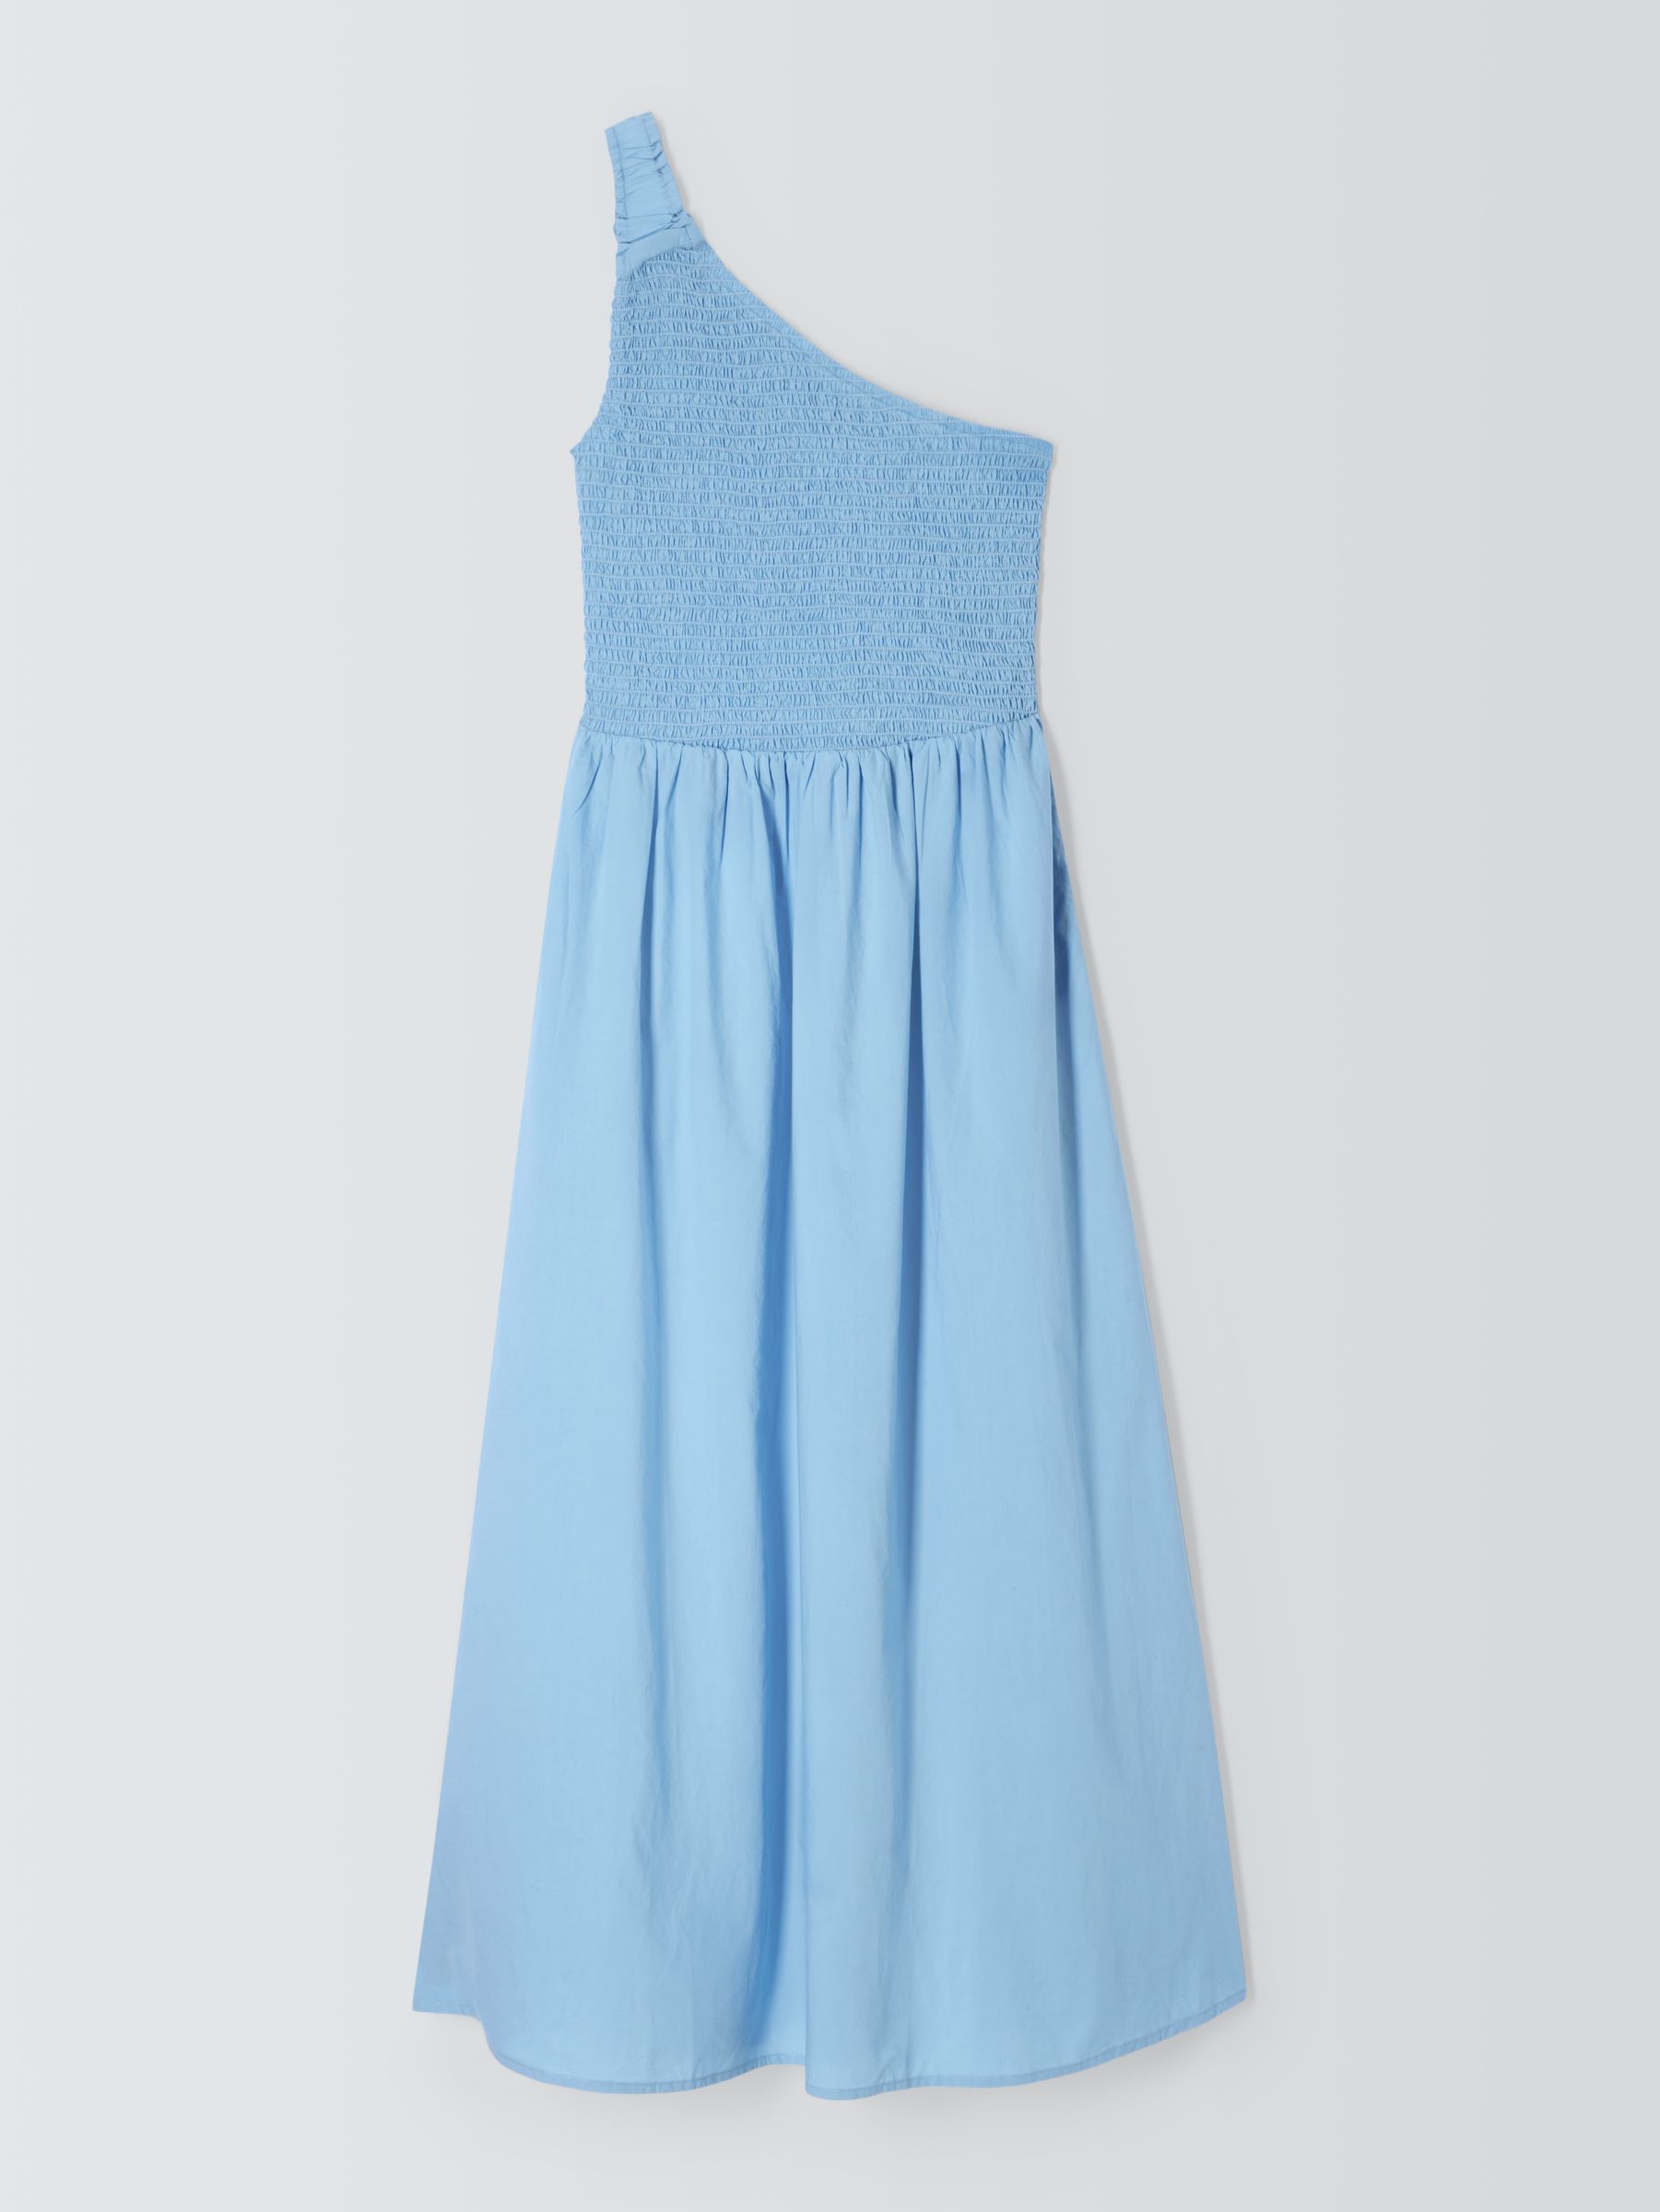 John Lewis ANYDAY Shirred Bodice Asymmetric Dress, Blue, 6